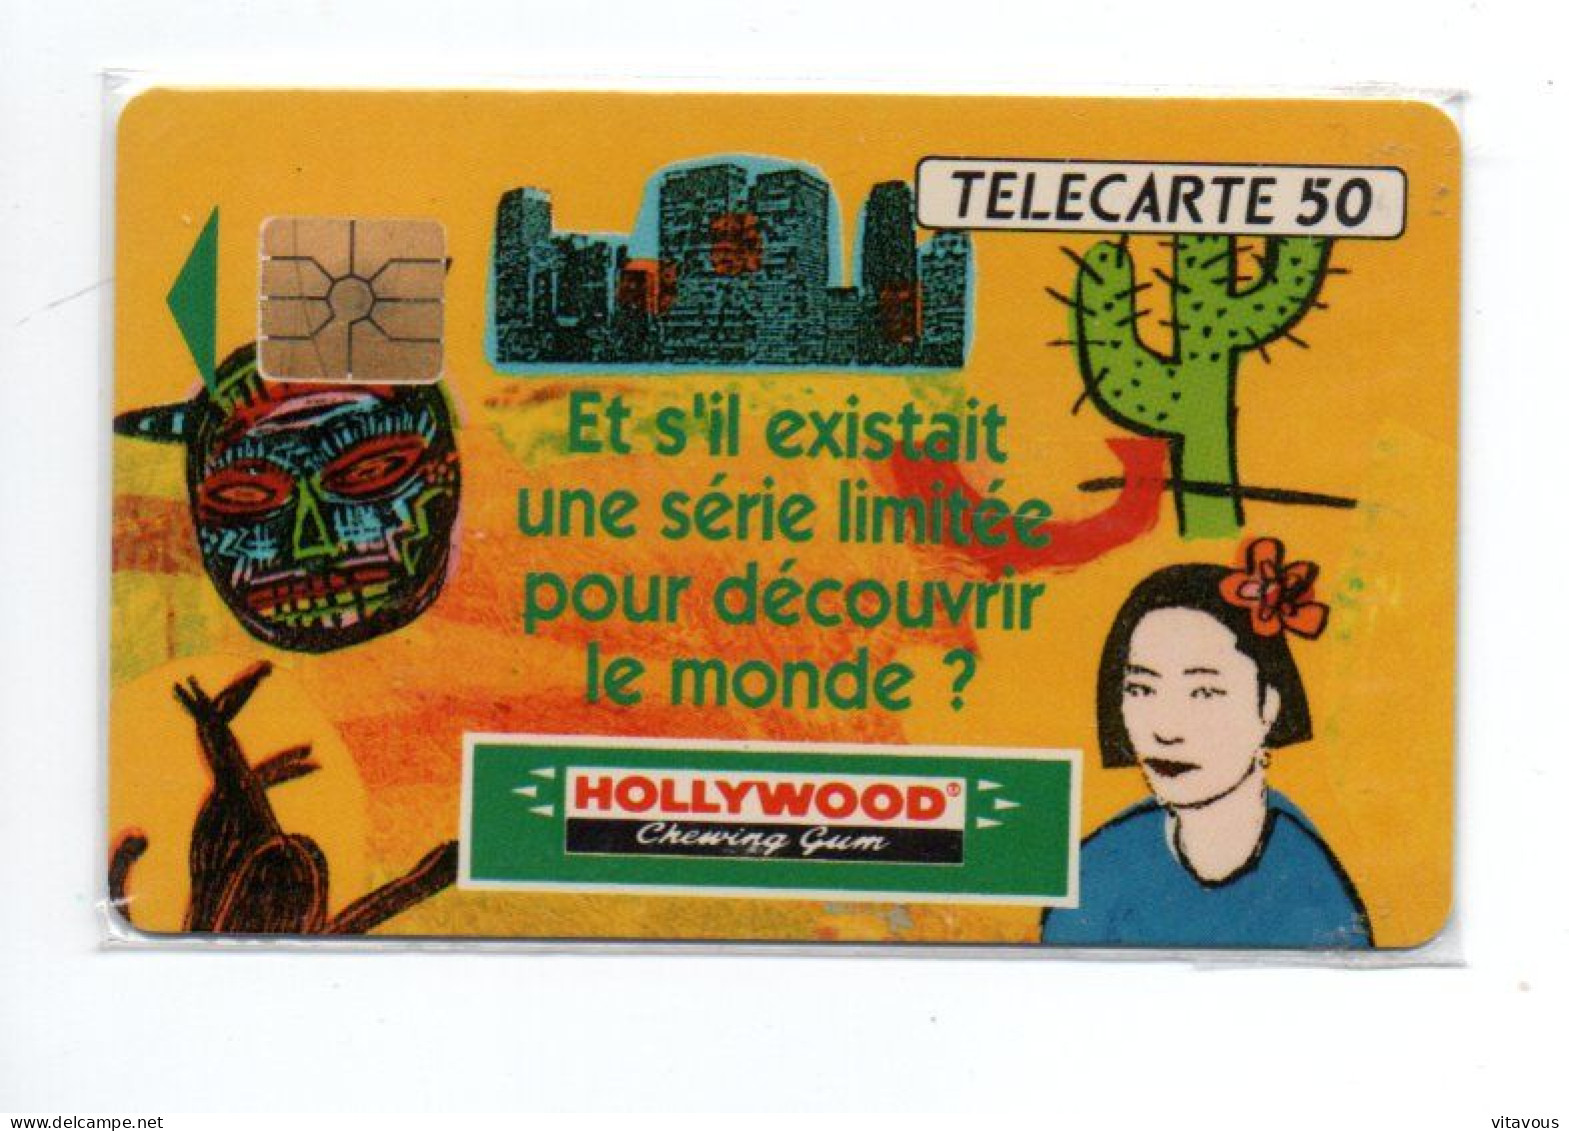 Hollywood Chewing Gum - Télécarte FRANCE 50 Unités  Phonecard  (K 155) - 1992